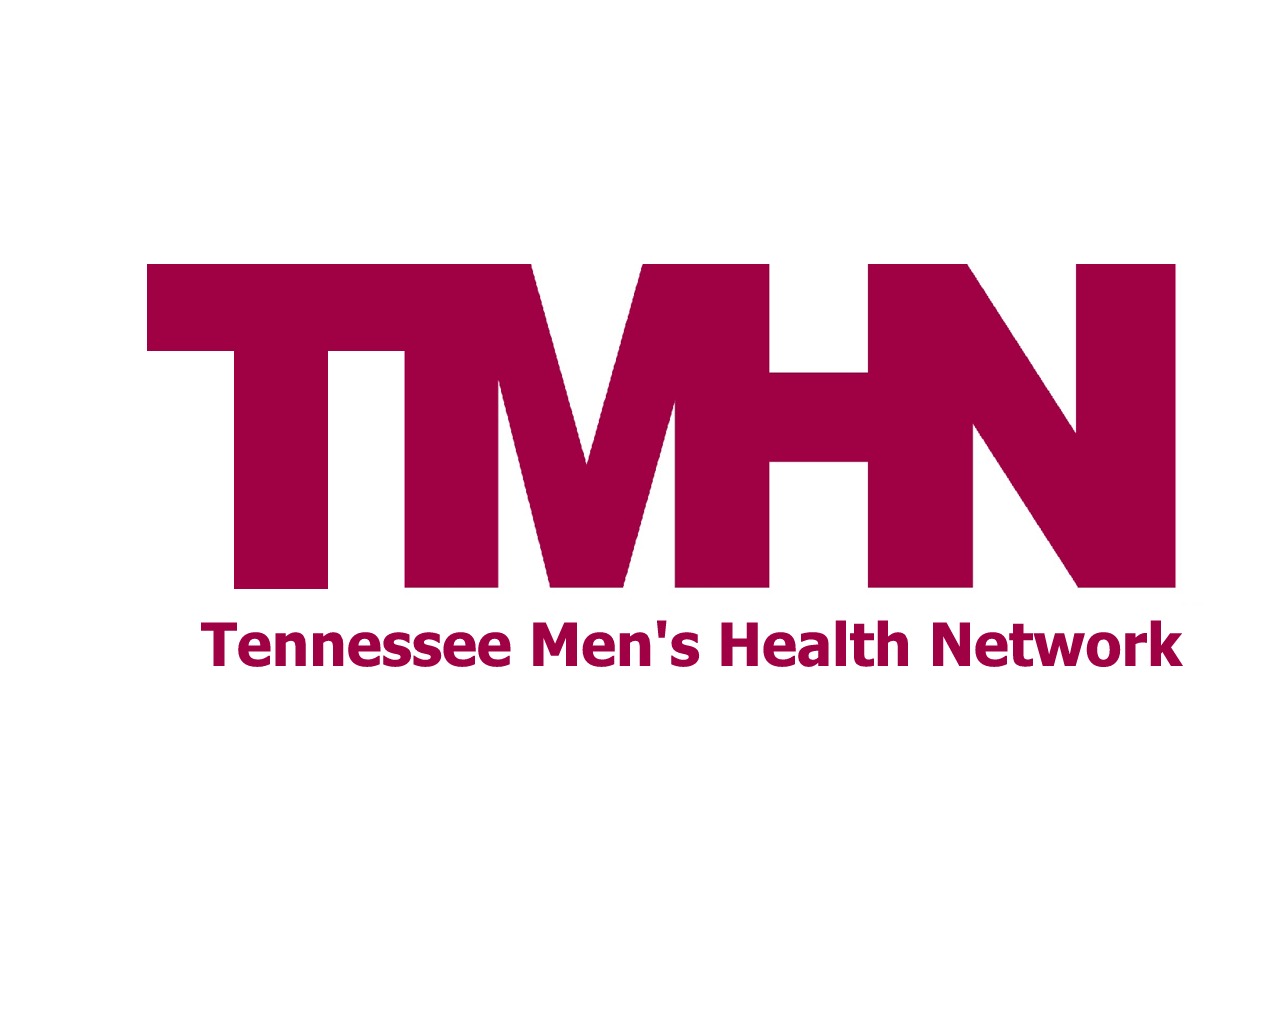 Tennessee Men's Health Network